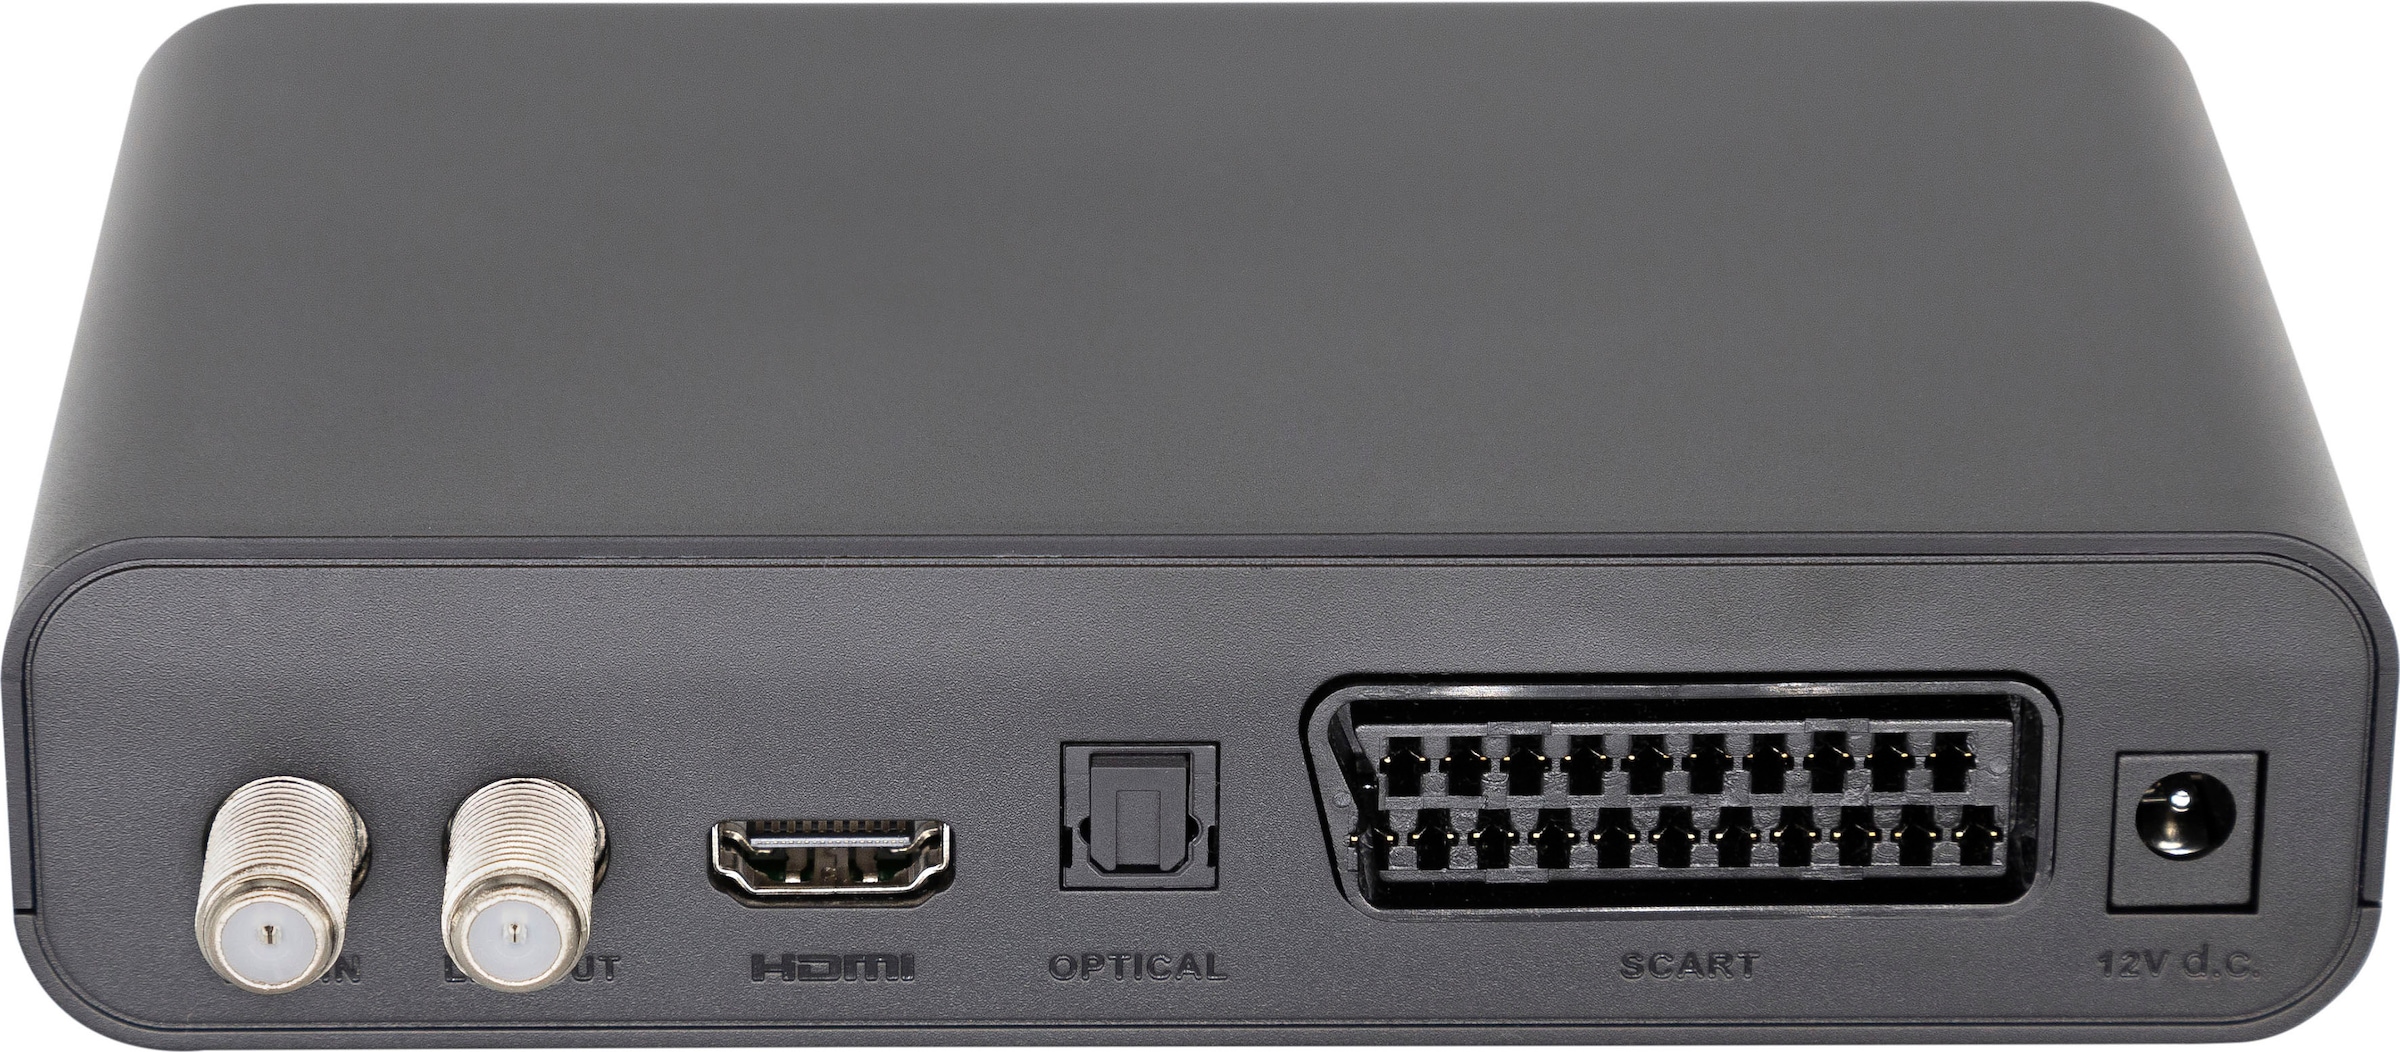 Humax Satellitenreceiver »HD Fox Digitaler«, (USB PVR Ready)